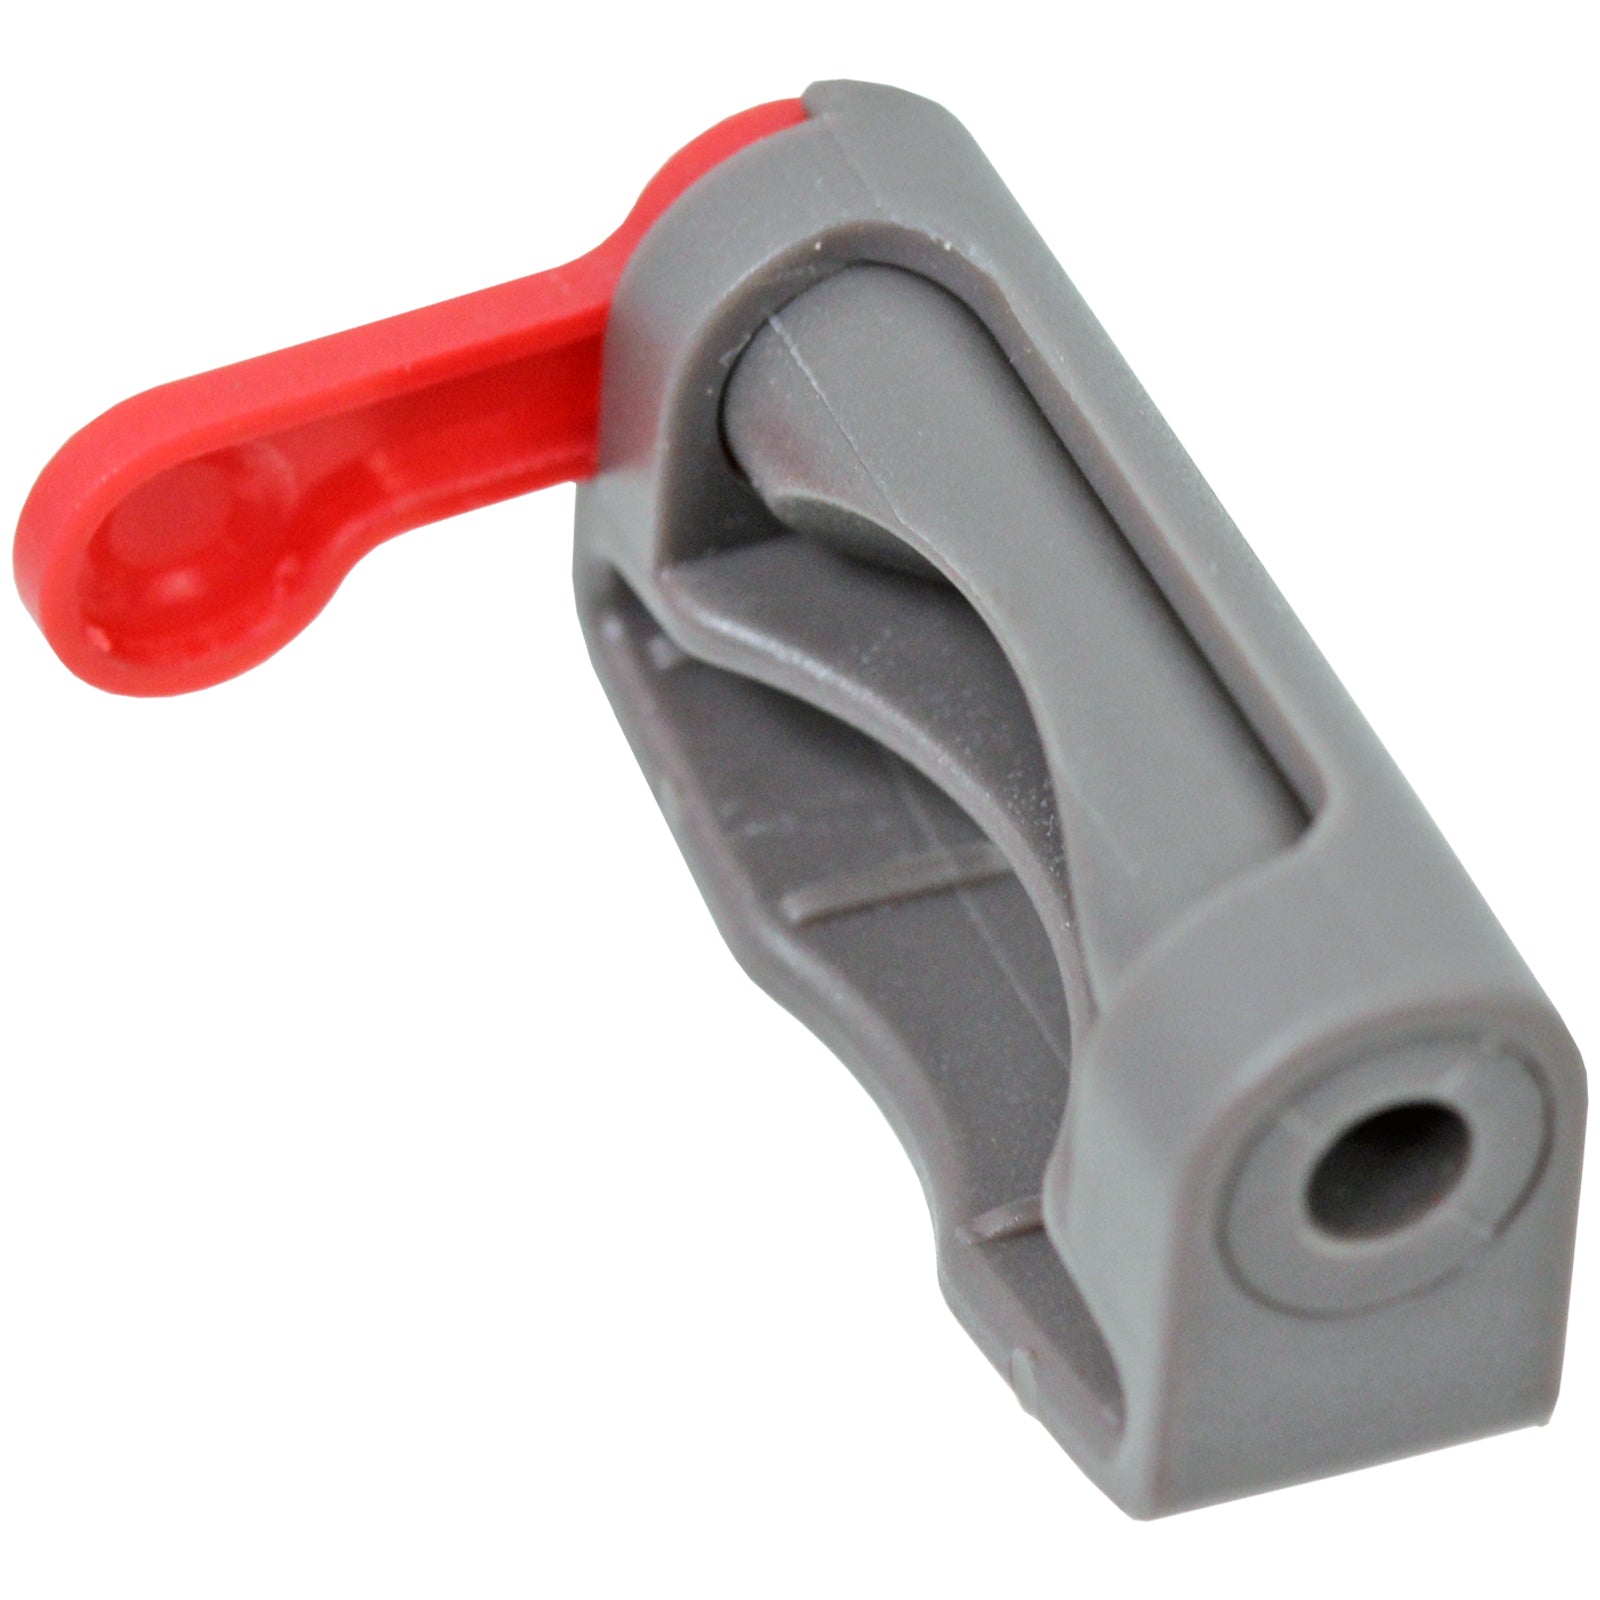 Trigger Lock for DYSON V10 SV12 Vacuum Cleaner Cordless Power Holder Button (Pack of 2)